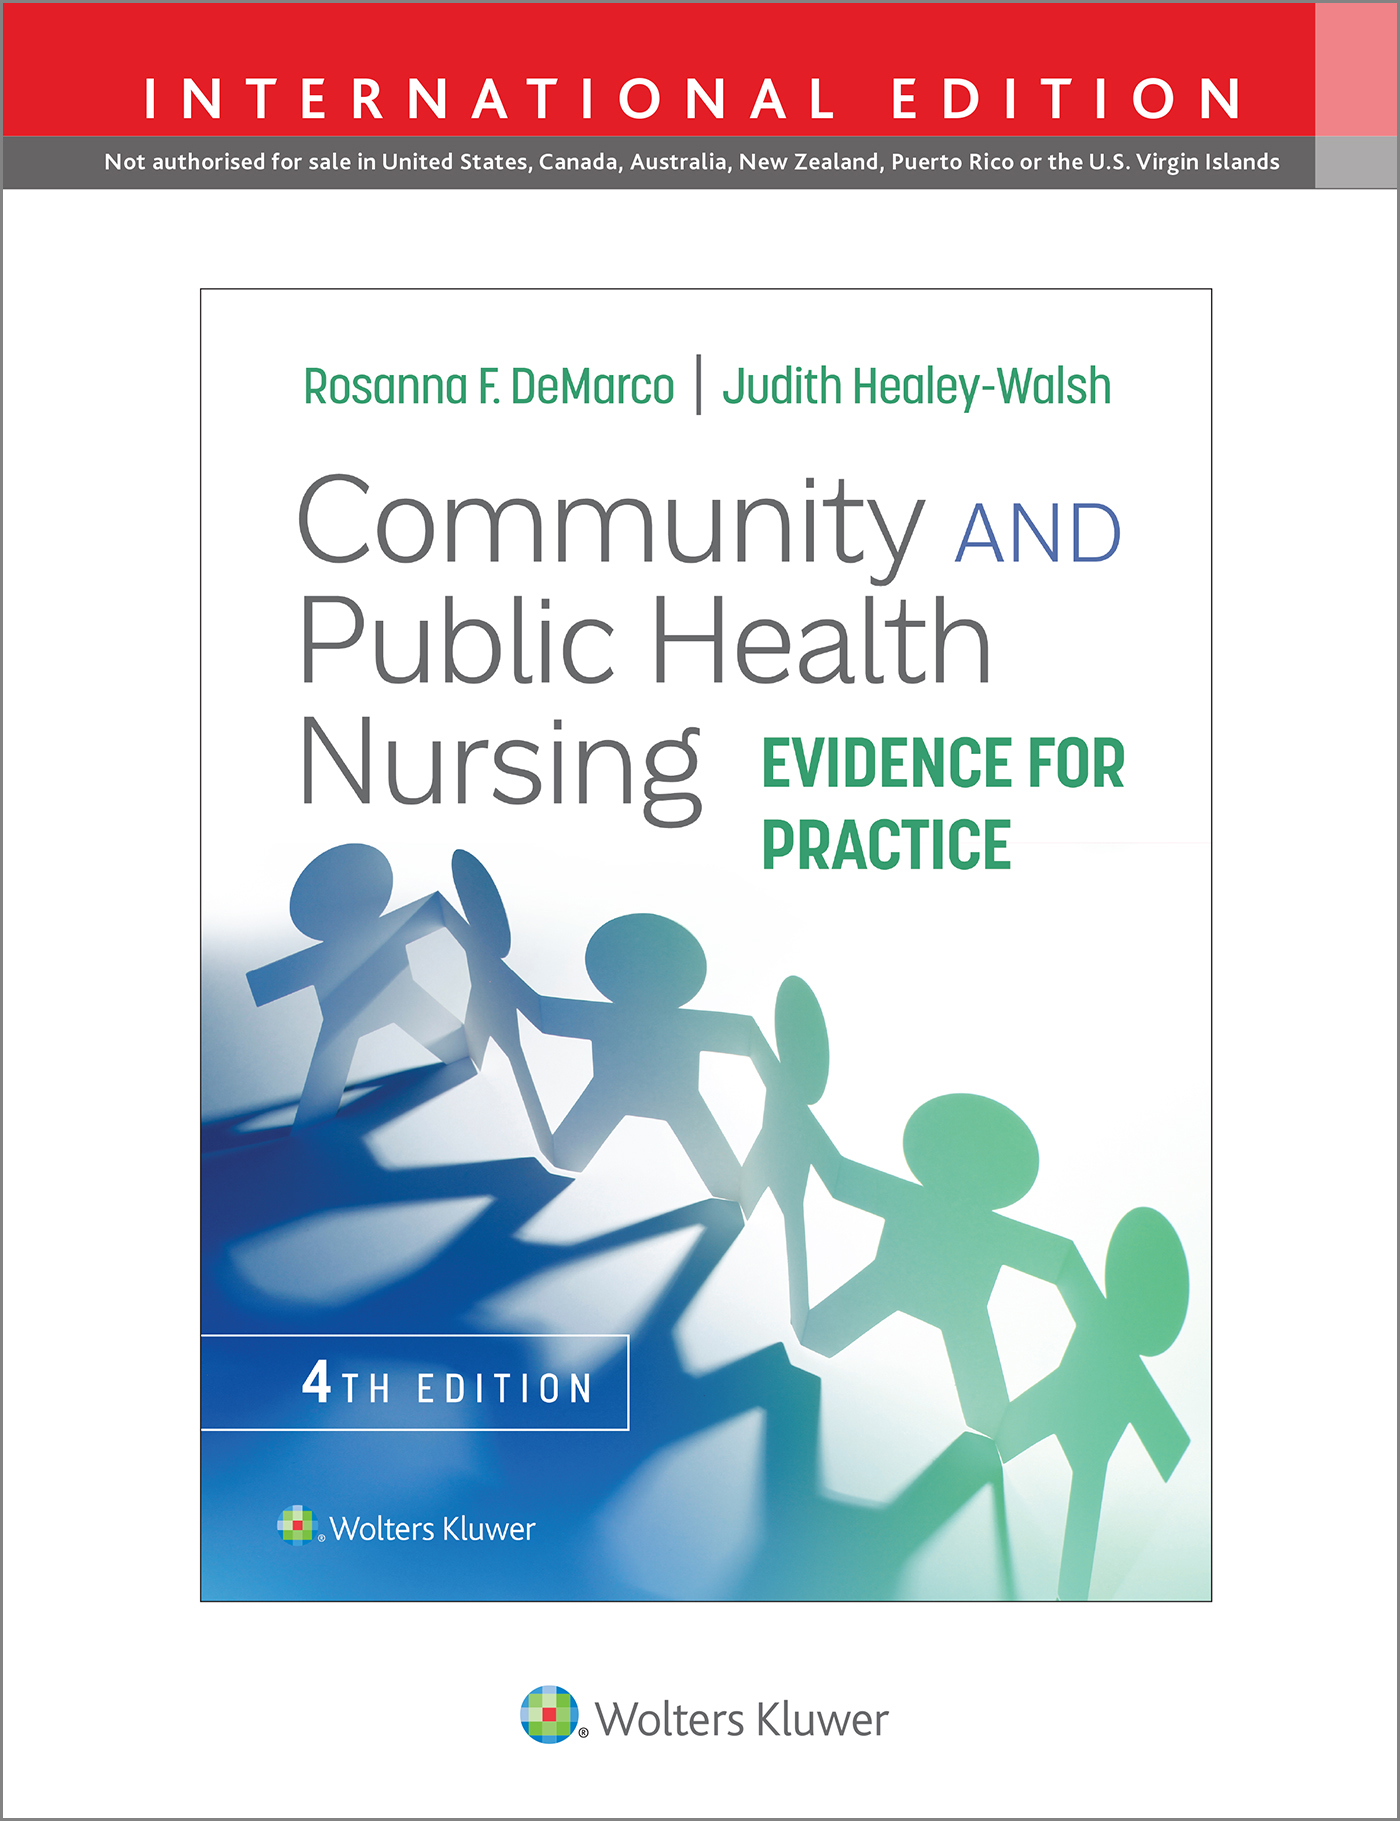 Community & Public Health Nursing, 4th ed.(Int'l ed.)- Evidence for Practice